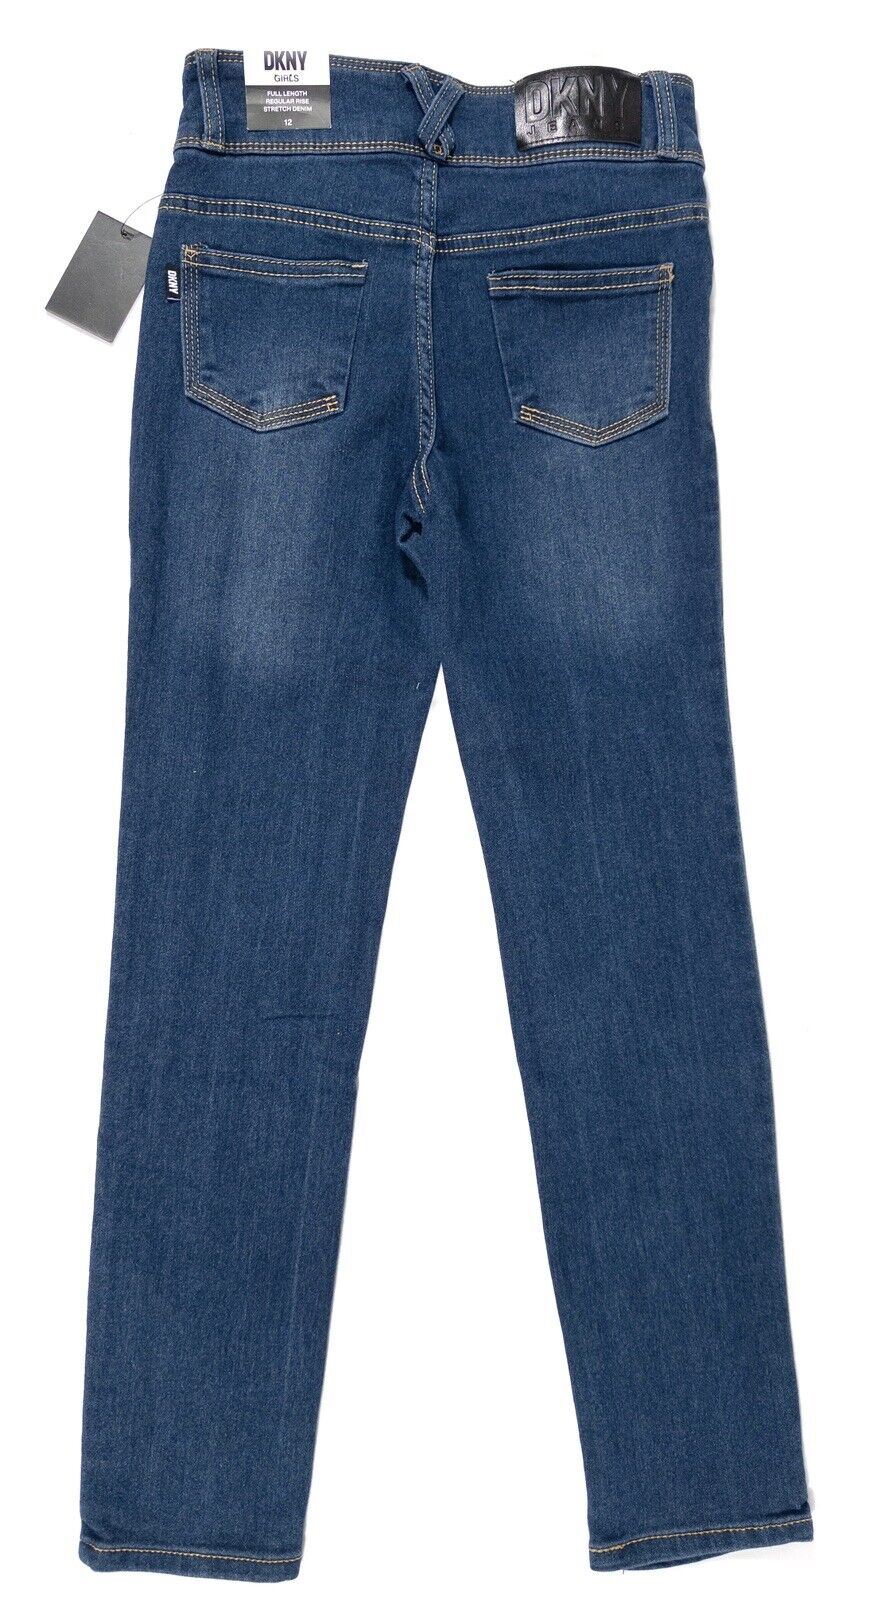 DKNY JEANS Kids Girls Stretch Blue Jeans Size UK 12 Years